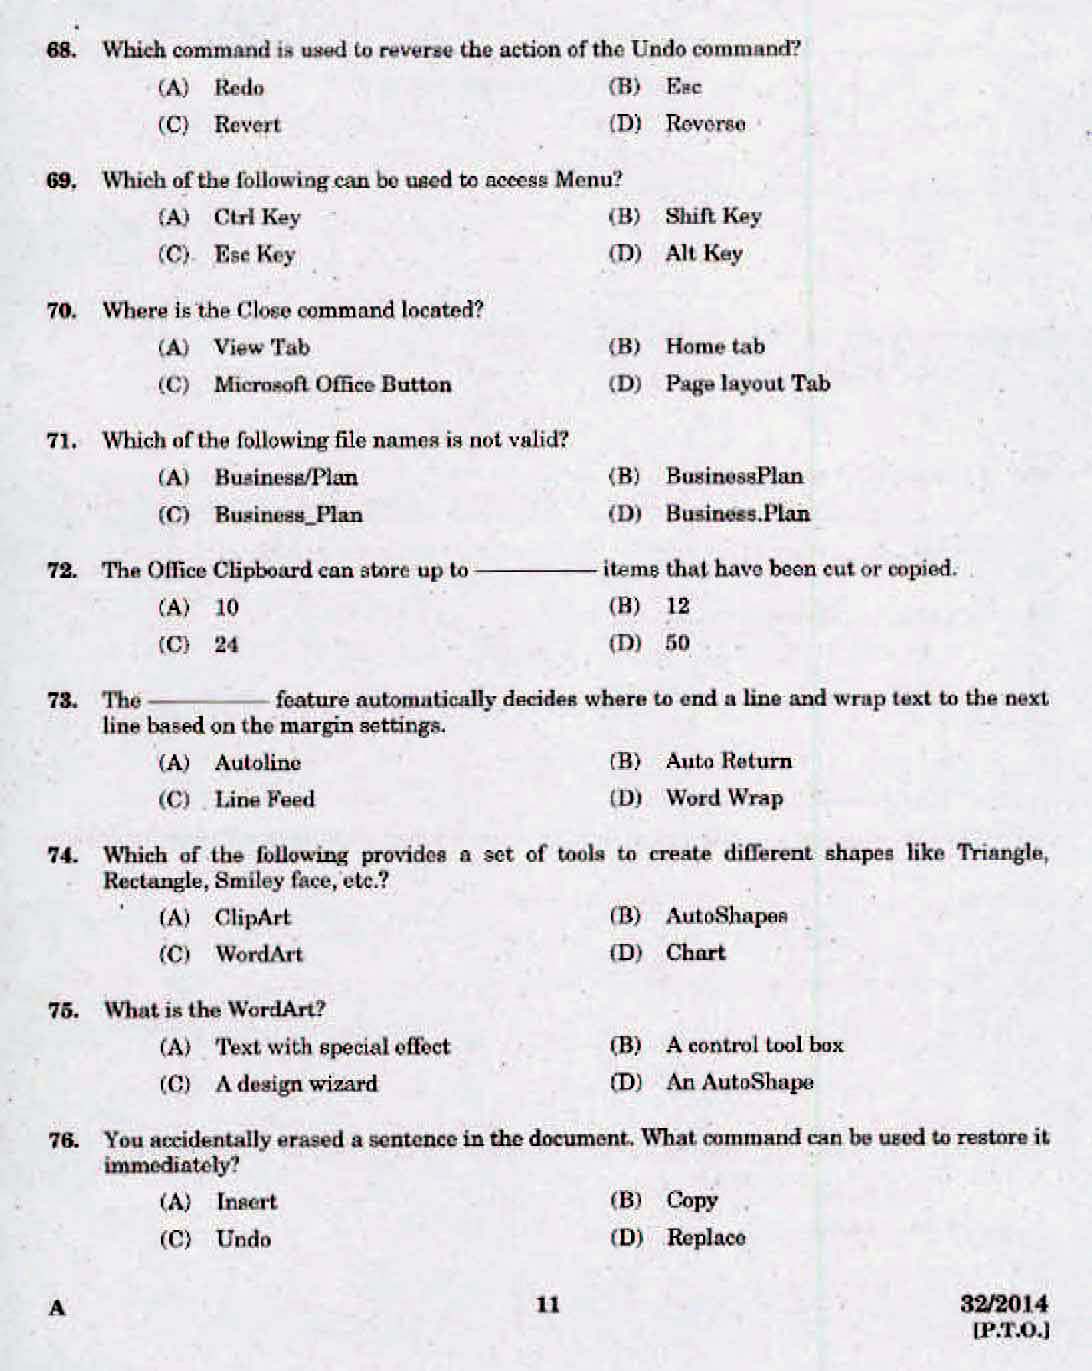 Kerala LD Typist Exam 2014 Question Paper Code 322014 9